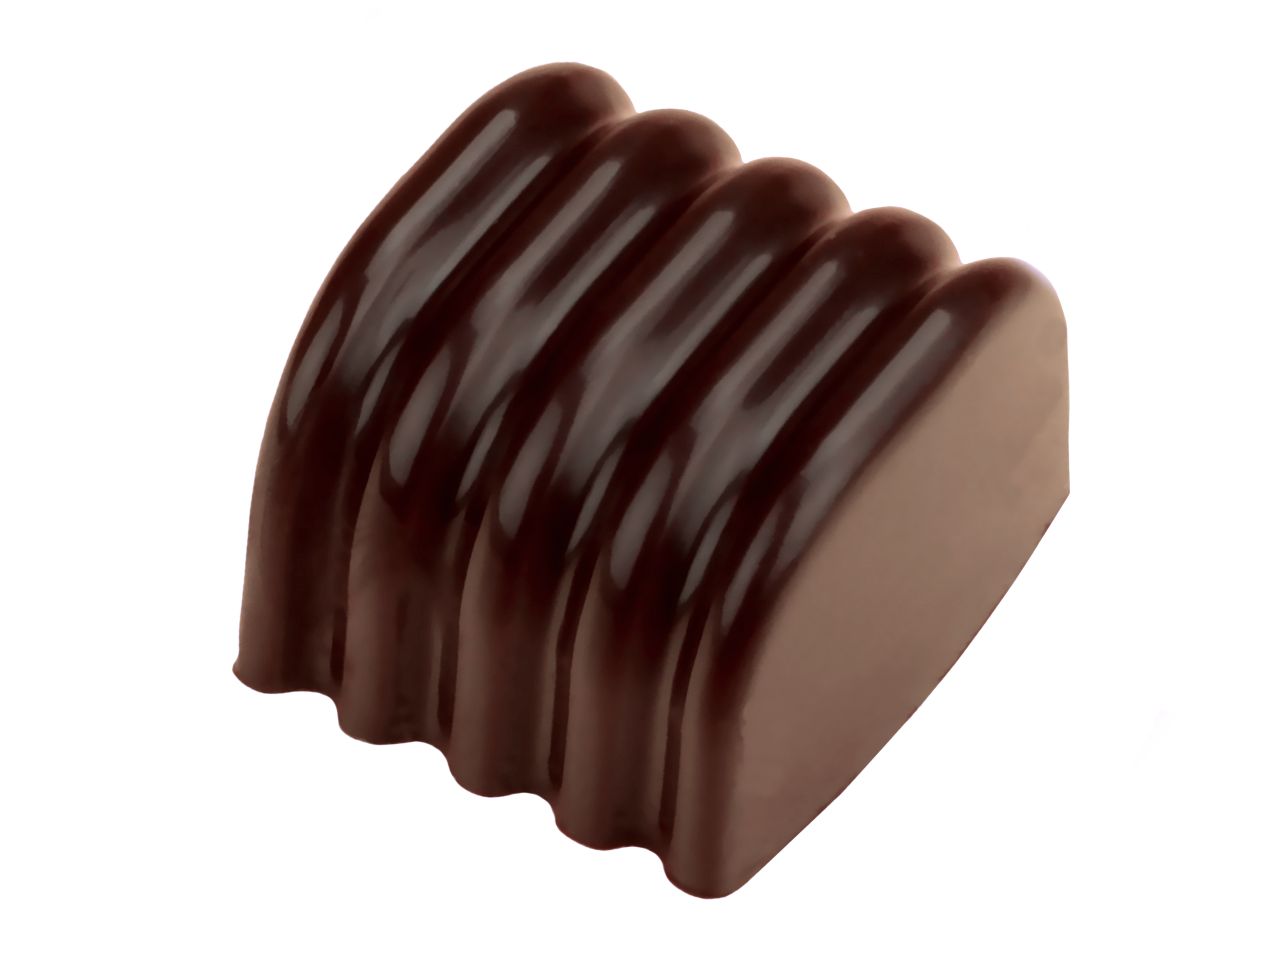 Schokoladenform: Stripes, Kunststoff, transparent, 24 Mulden à 2,4 x 2,6 x 2 cm